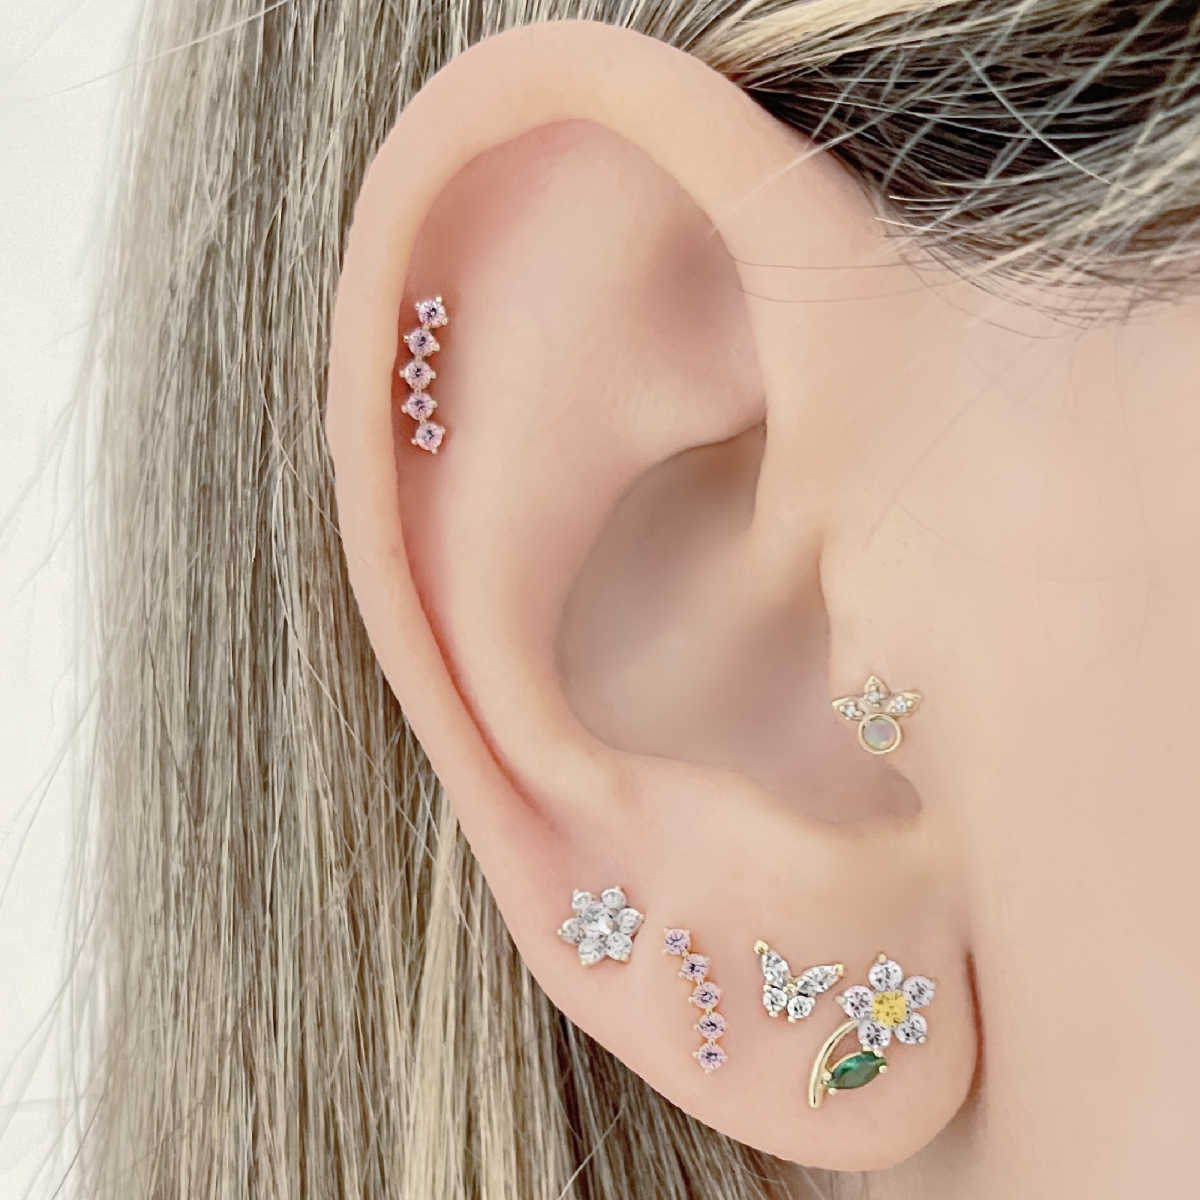 Gemstone Flower Earrings on Model | 14k Solid Gold Screw Back Stud